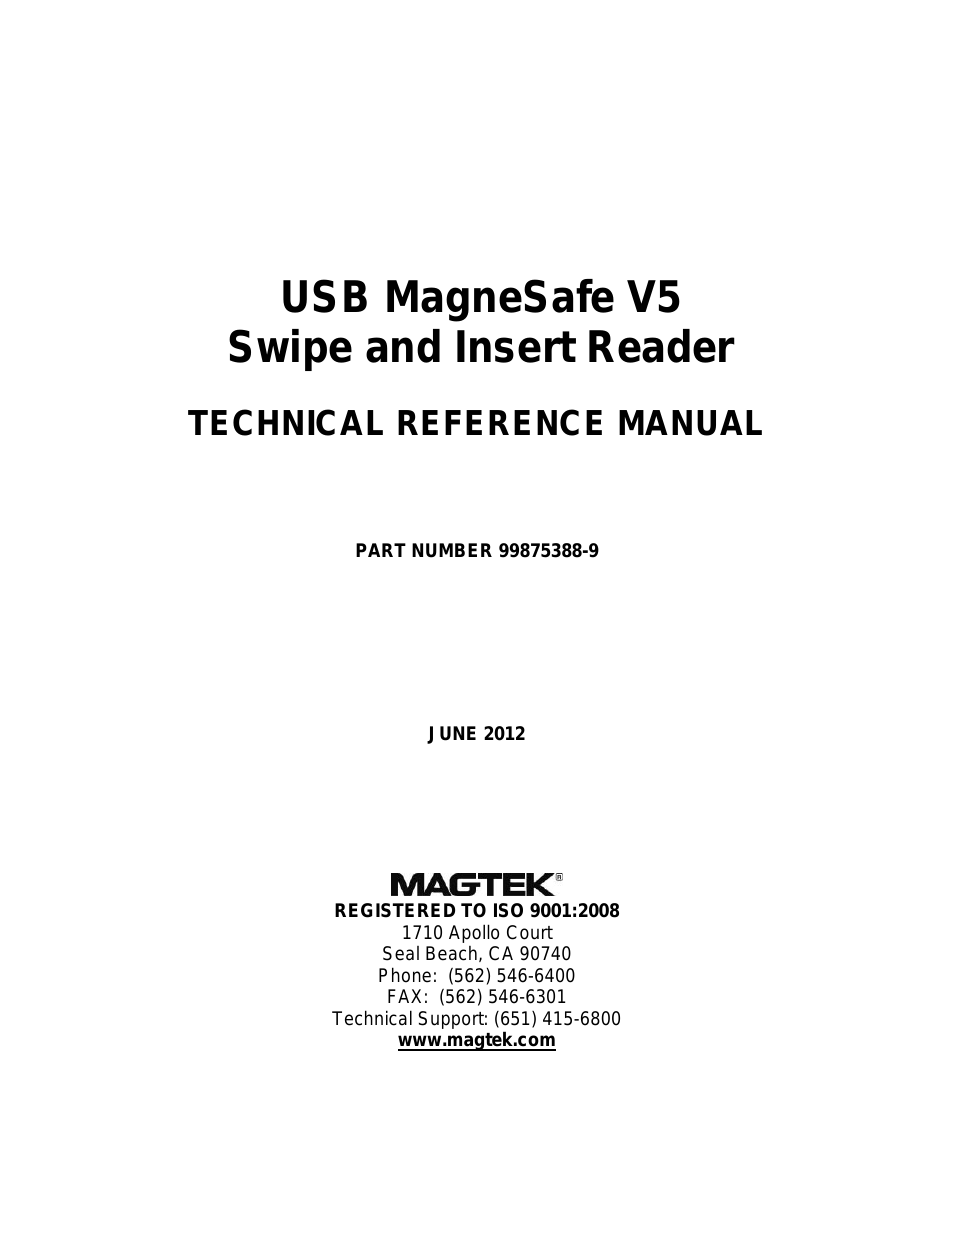 USB MagneSafe Swipe and Insert Reader V5